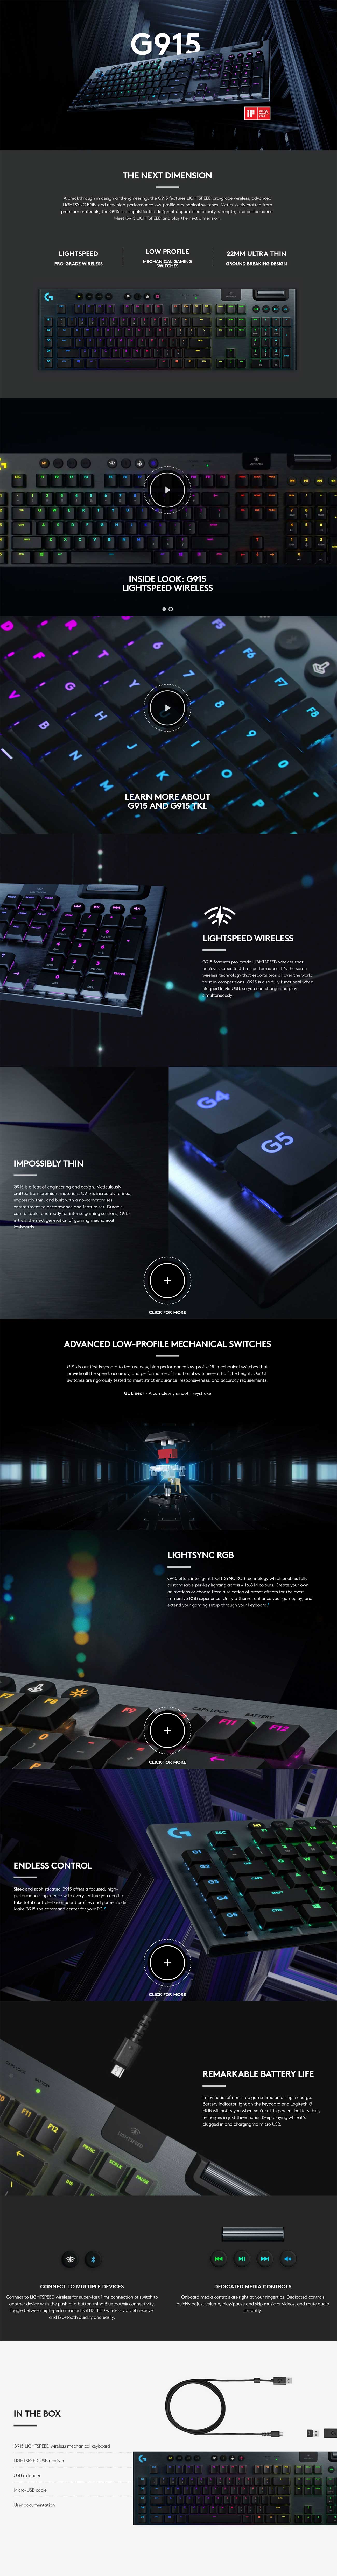 Logitech G915 LIGHTSPEED Wireless RGB Mechanical Gaming Keyboard - GL Linear 920-009227 Details